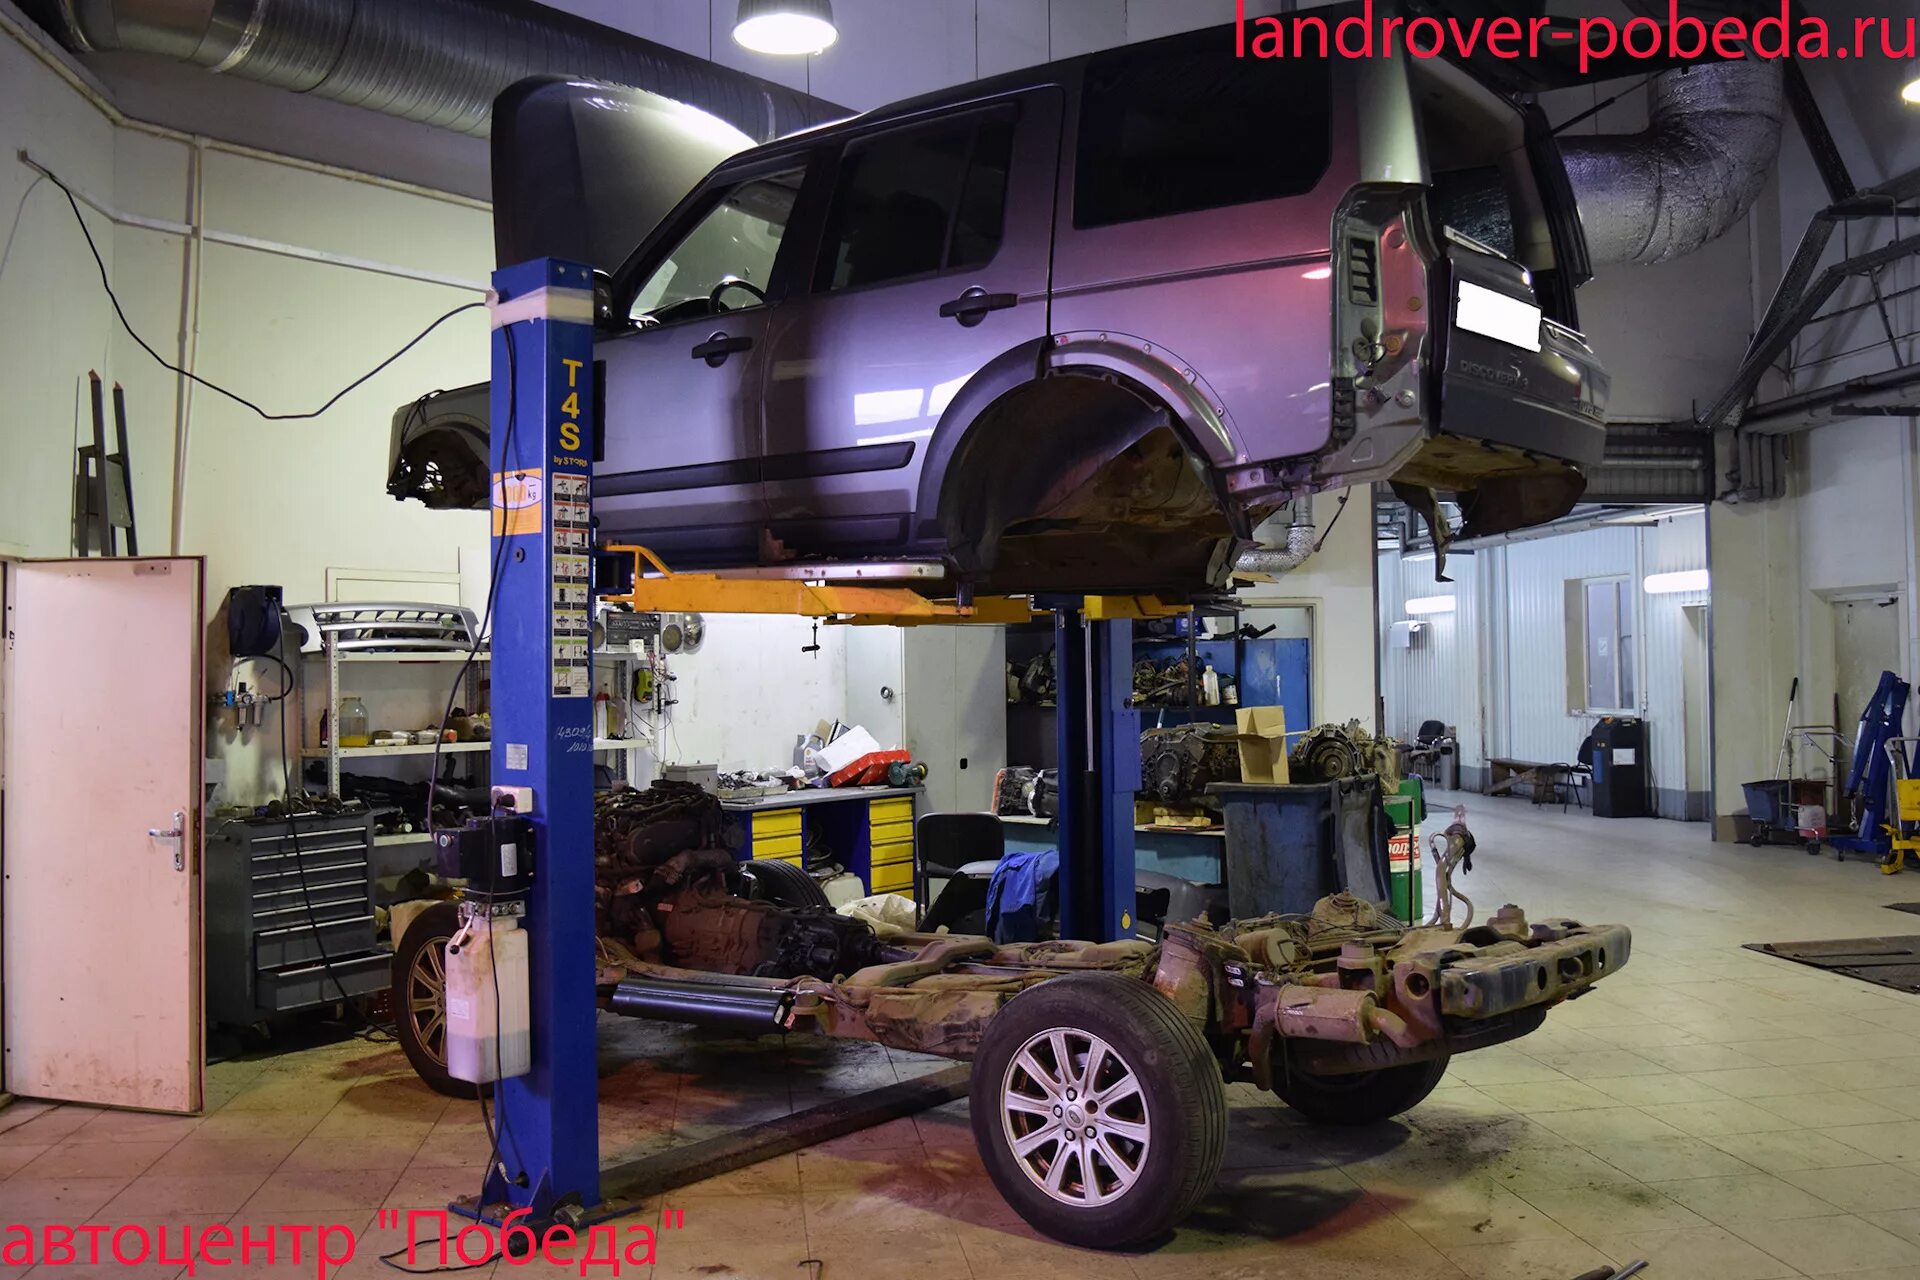 Range Rover Discovery 3 снятие кузова. Ленд Ровер Дискавери 3 дизель на подъёмнике. Подъёмник для Land Rover Discovery. Land Rover Discovery 3 поднятие кузова.